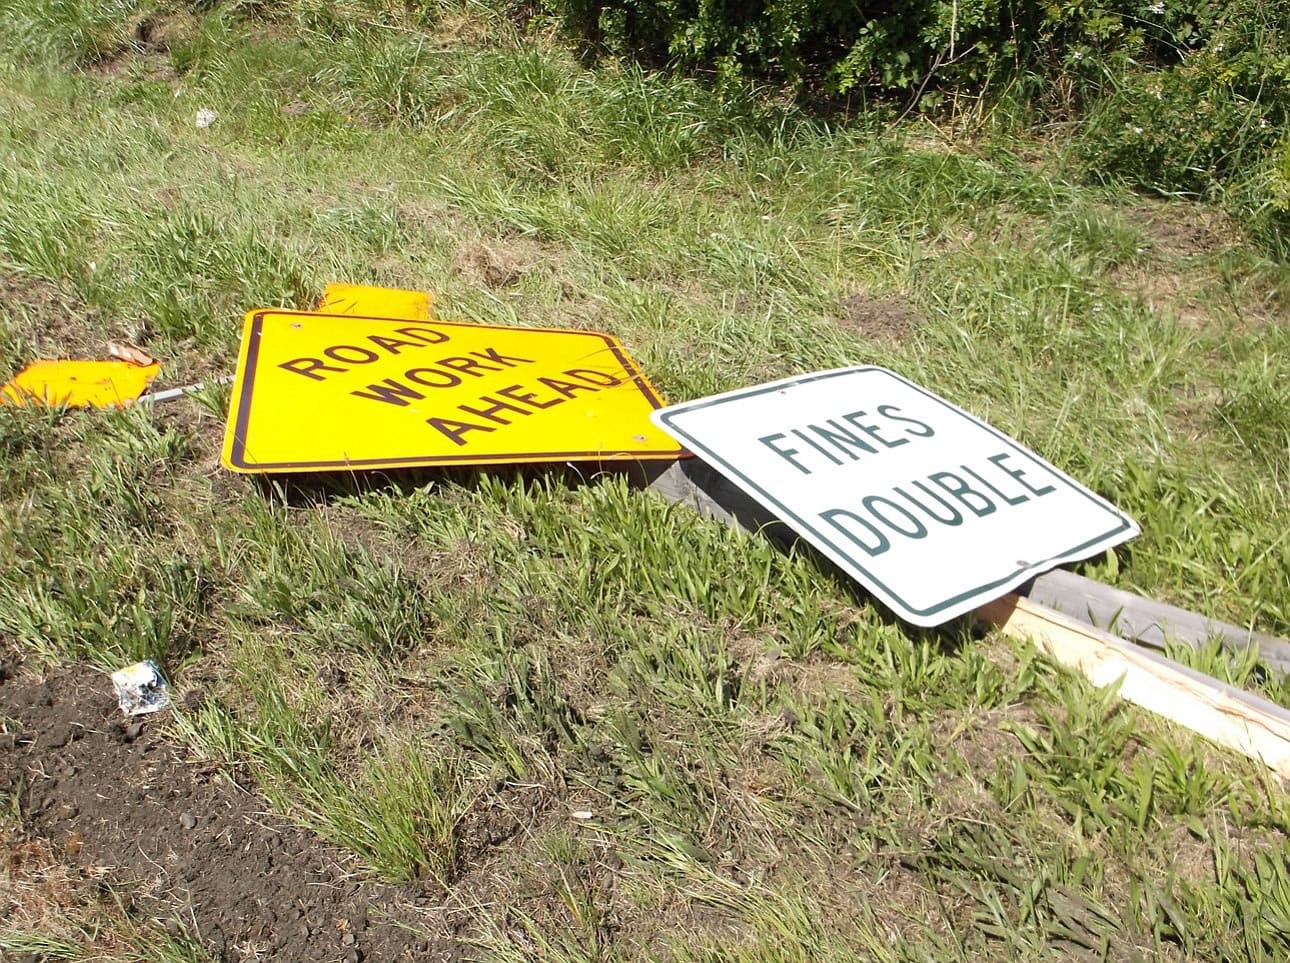 The crash near Woodburn, Ore happened in a highway work zone.